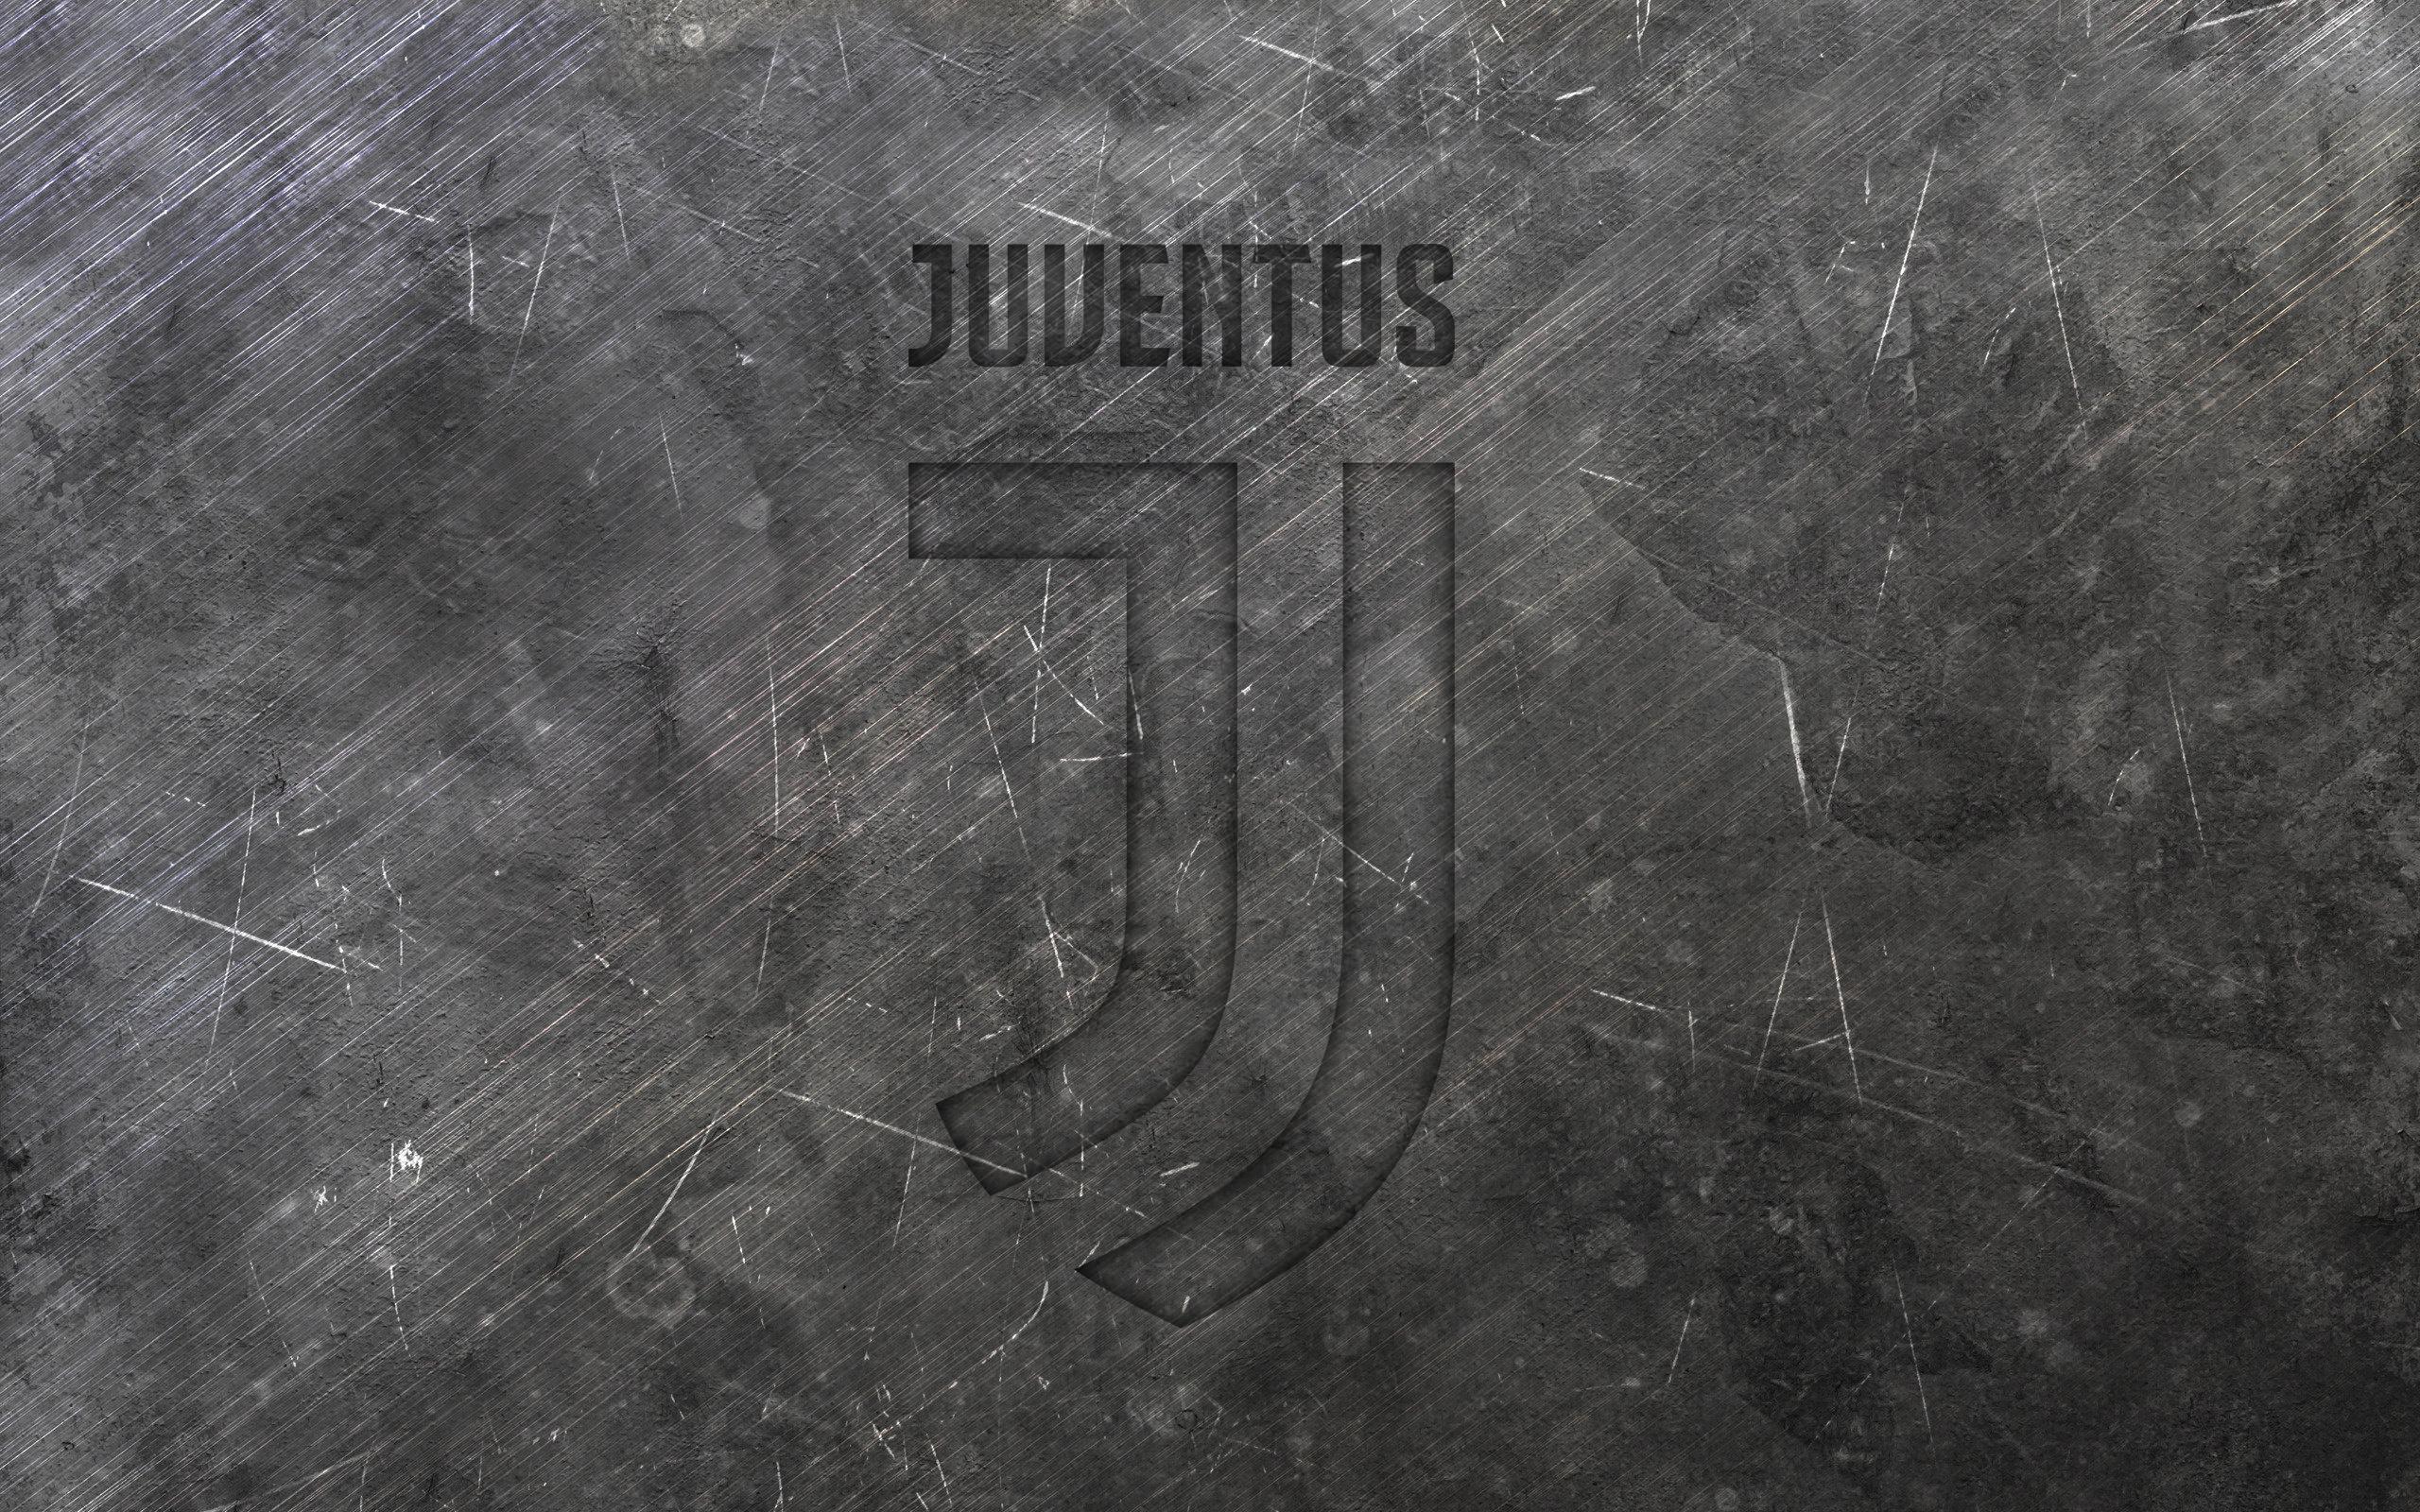 Download wallpaper Juventus, new logo, metal texture, new emblem